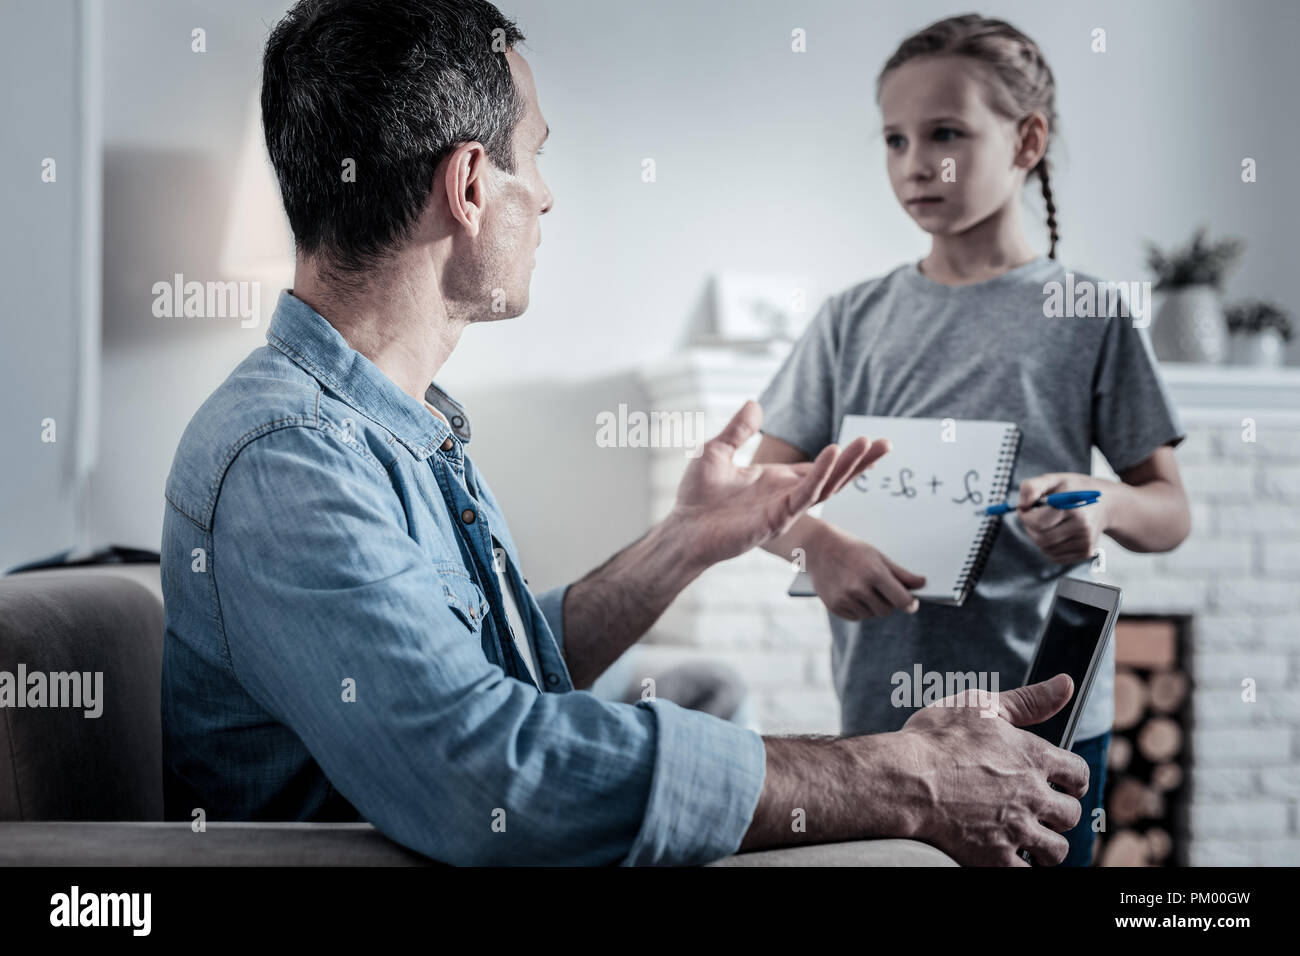 Nervous man critisizing the daughter Stock Photo